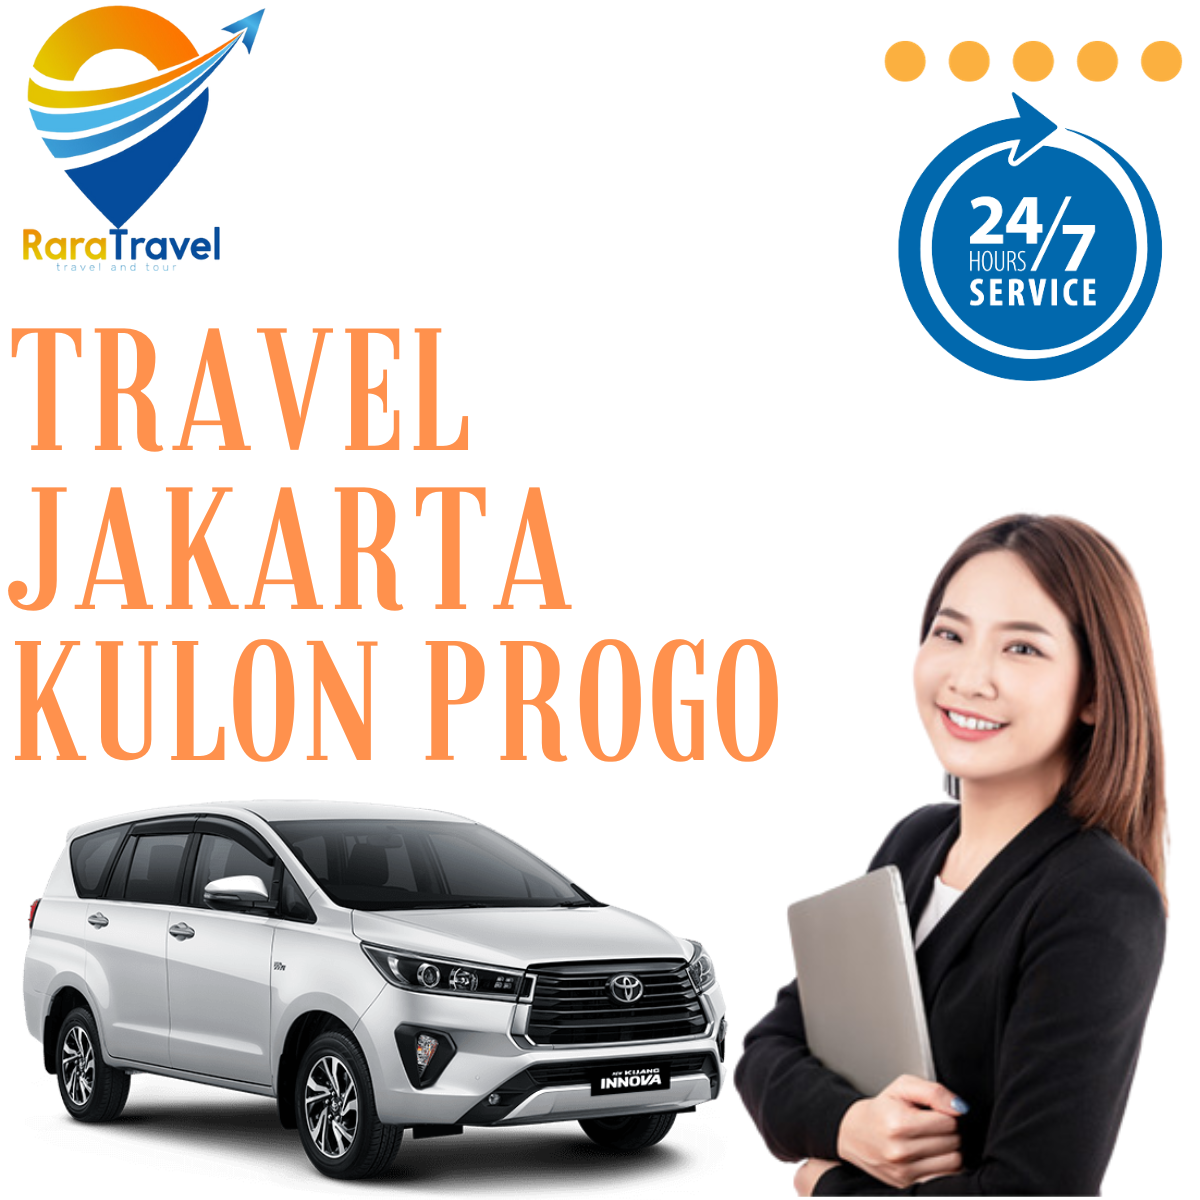 Travel Jakarta Kulon Progo via TOLL Harga Murah Hiace